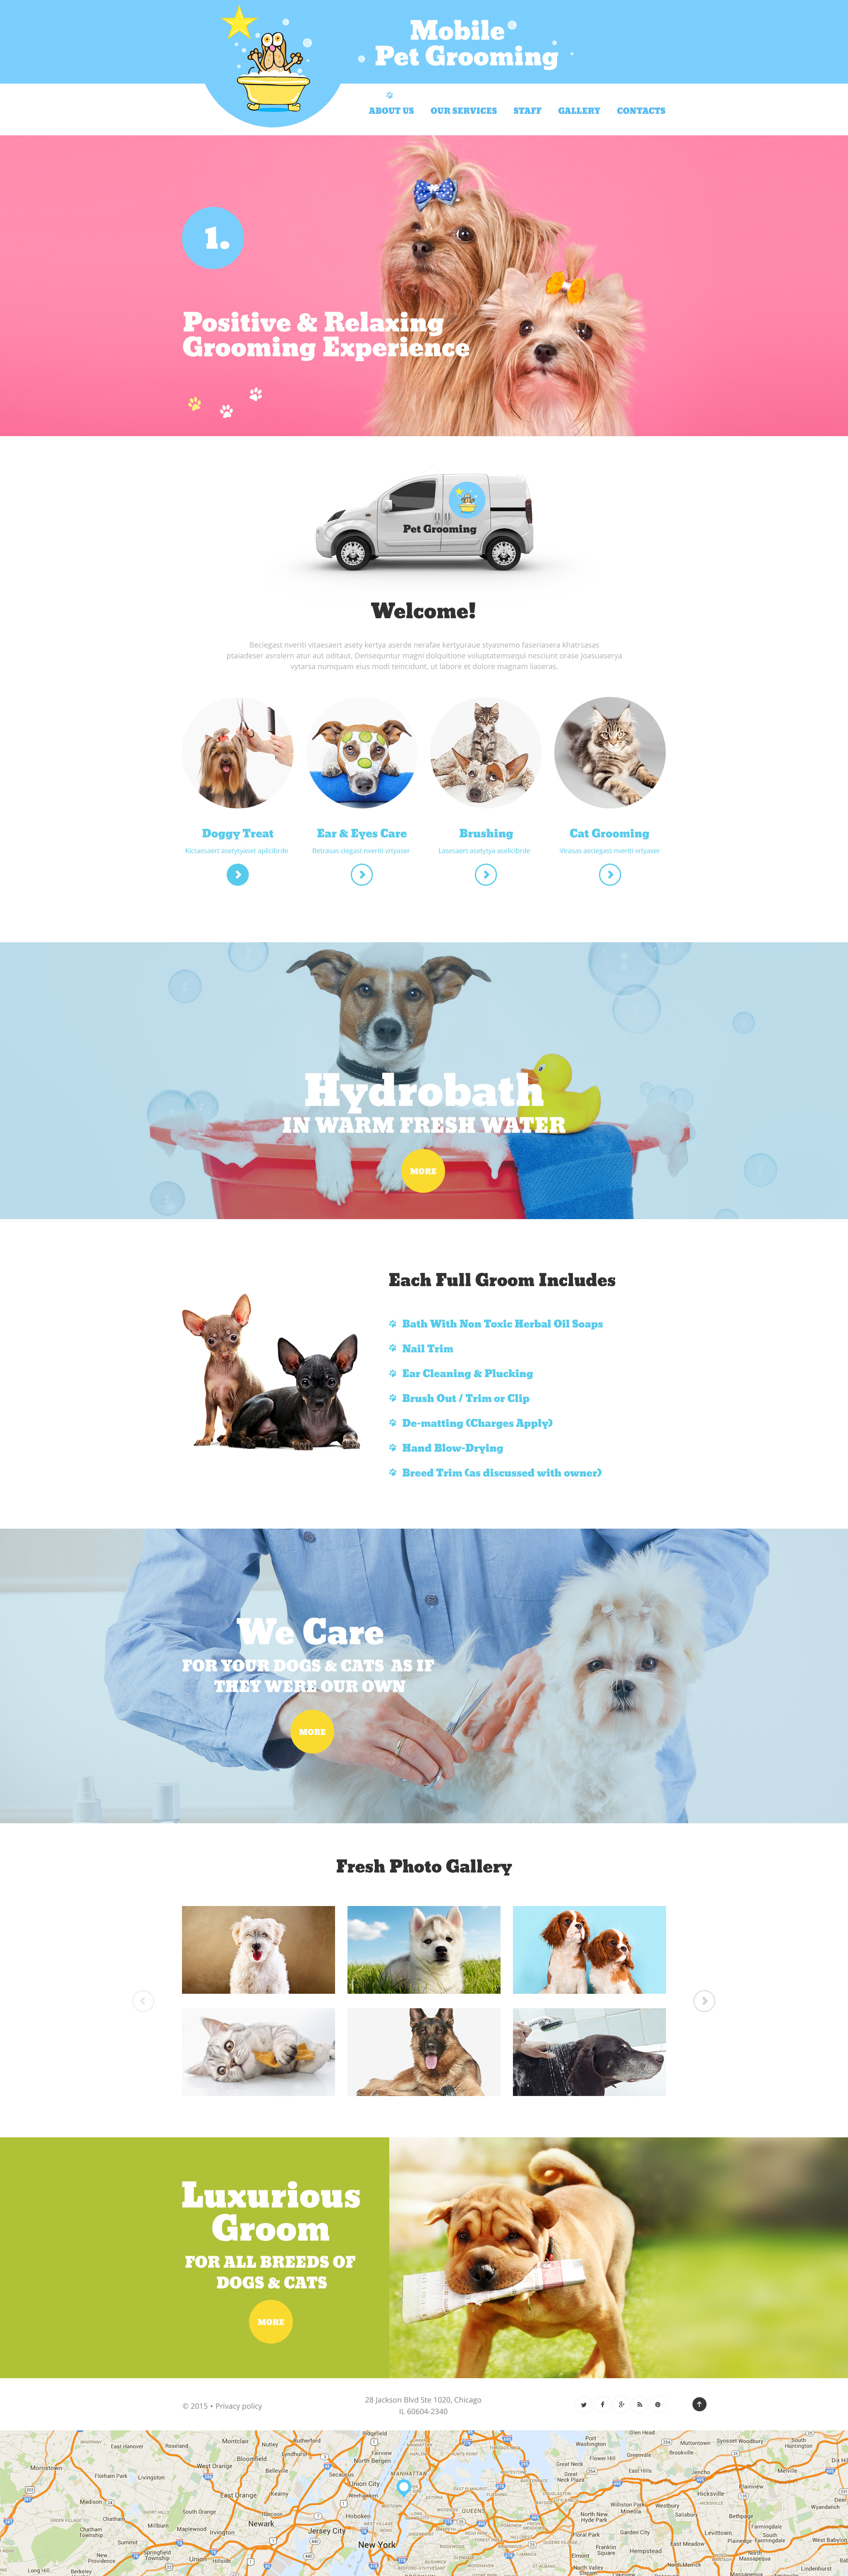 Mobile Pet Grooming Website Template